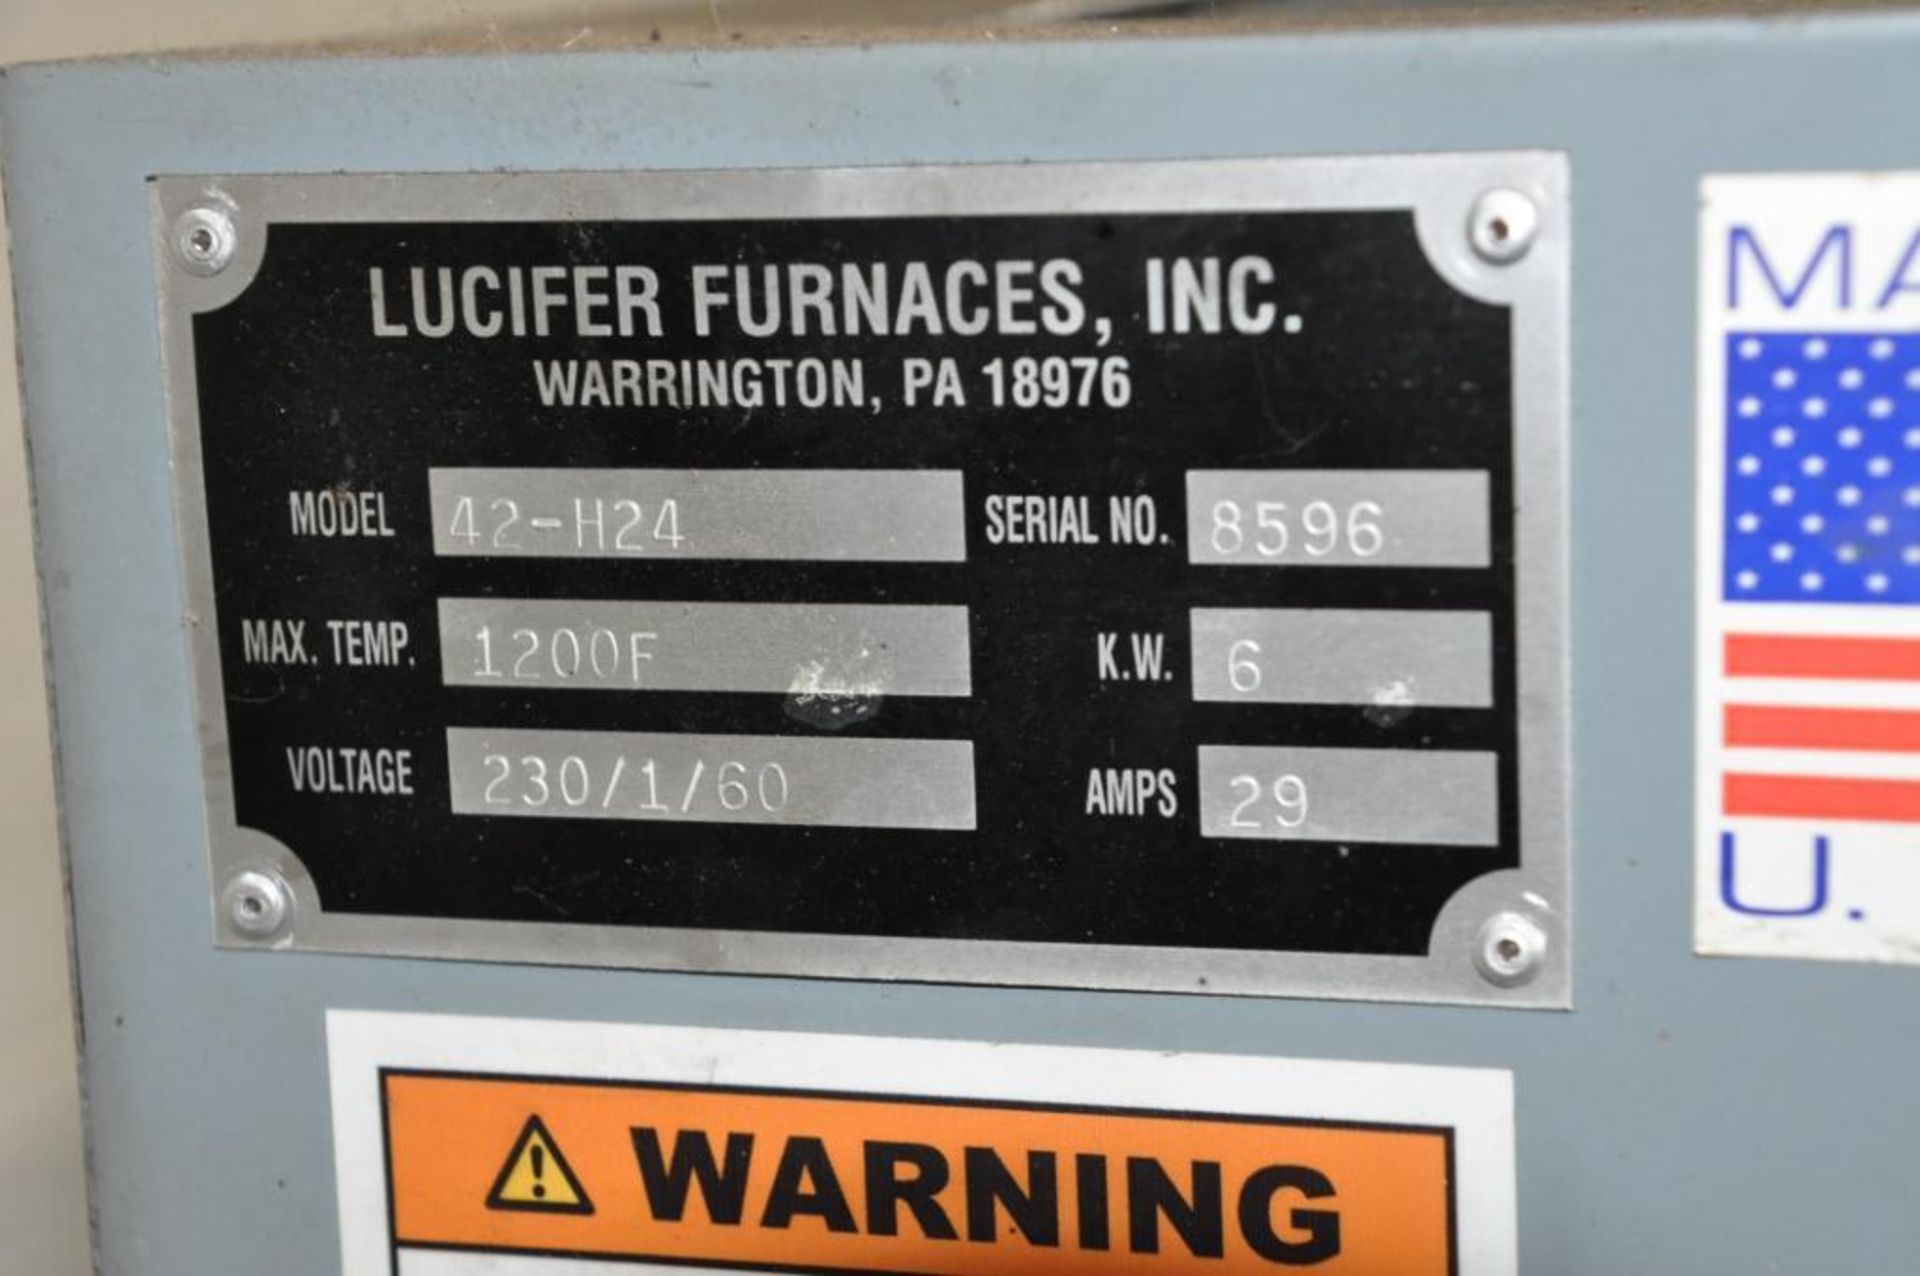 Lucifer Model 42-H24, 1200-Degree Fahrenheit Max Temperature Single Door Furnace, S/n 2596, 230/1/60 - Image 4 of 4